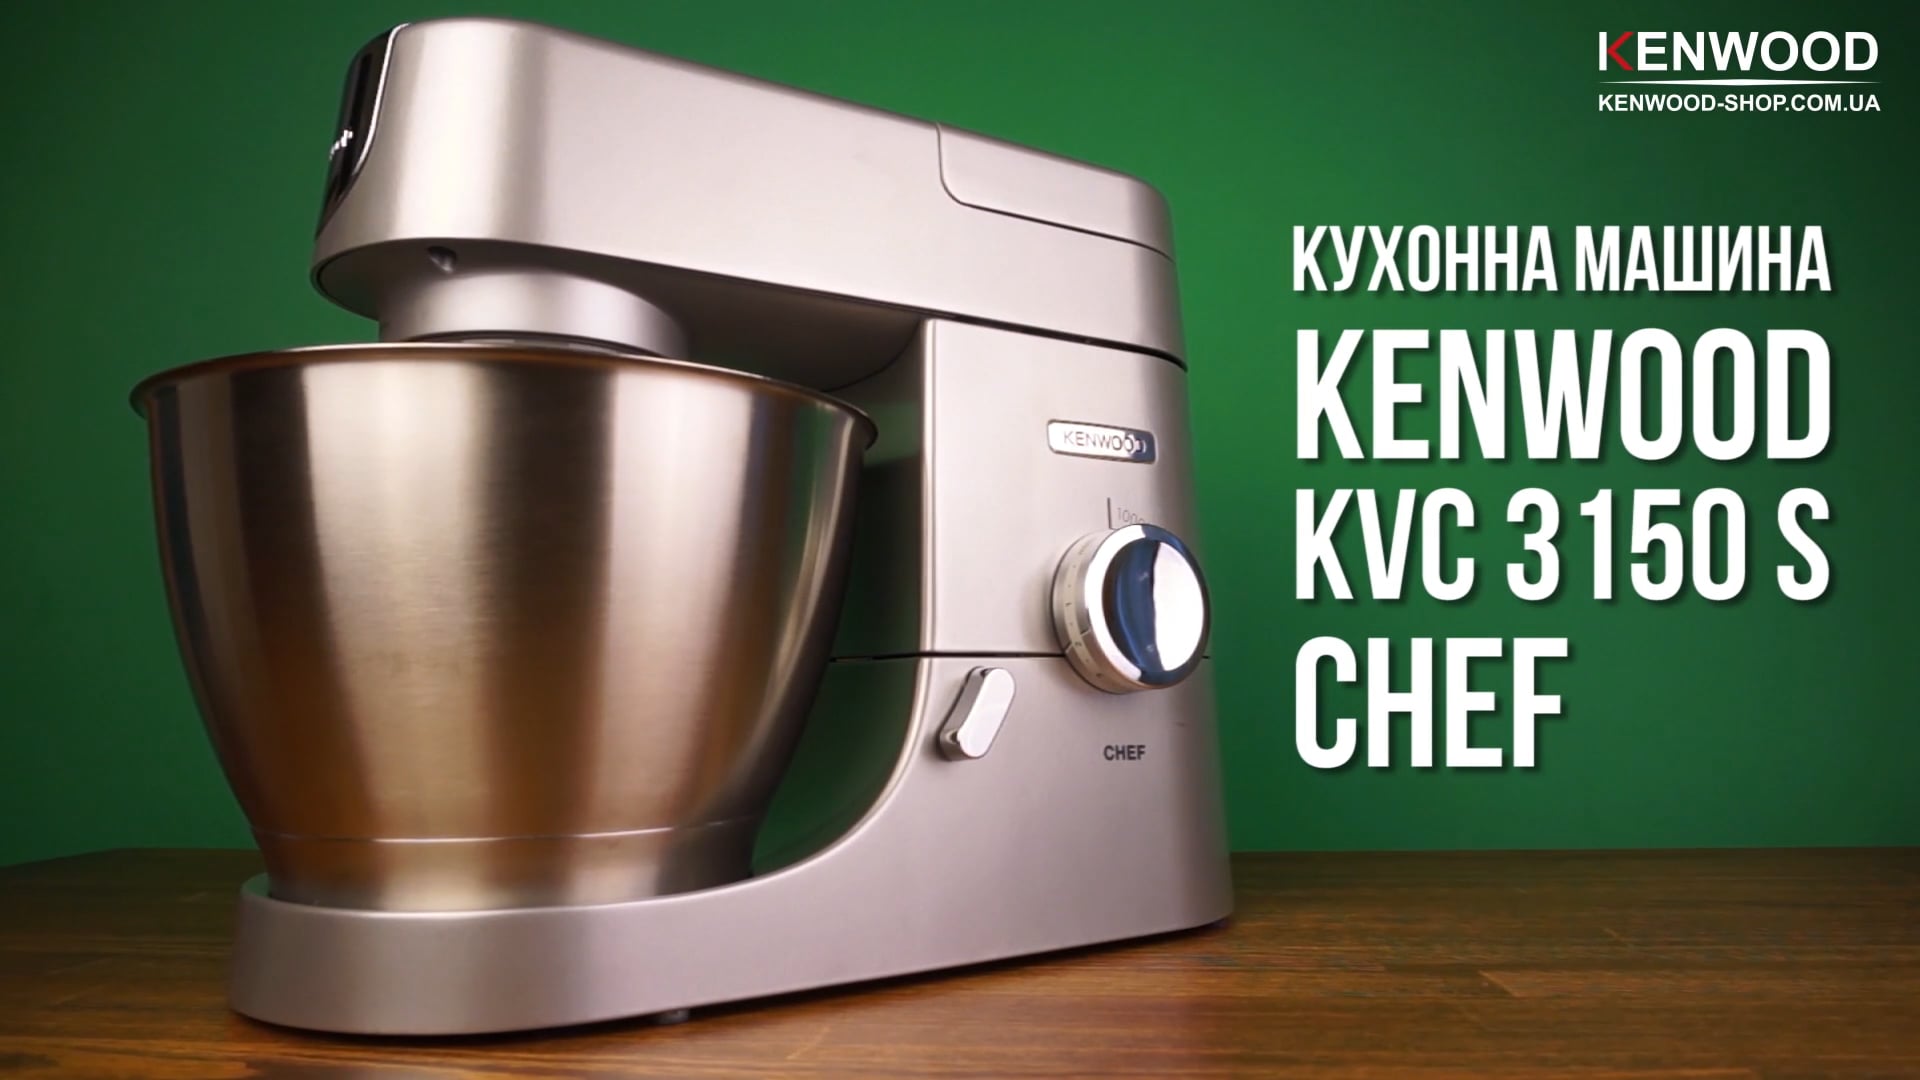 Кухонная машина Kenwood Chef kvc3100s. Комбайн Kenwood kvc3150s. Kenwood kvc3170s. Kenwood KVC-1000.